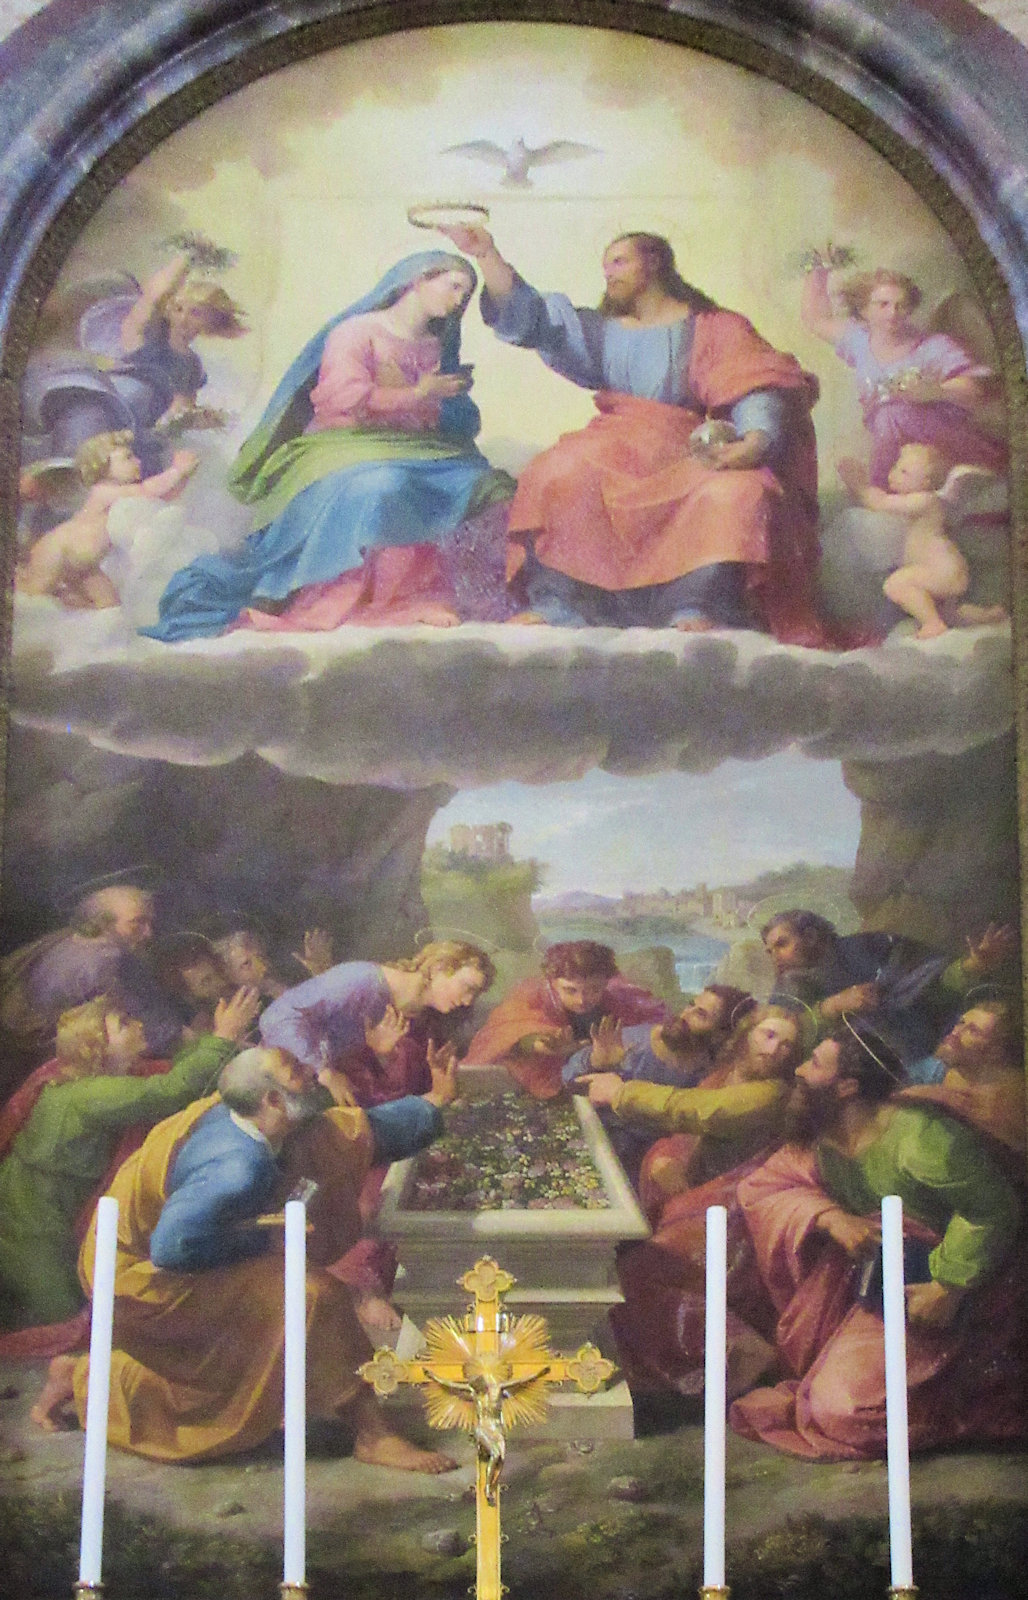 Altarbild nach dem Original von Giulio Romano, um 1845, in der Basilika San Paolo fuori le Mura in Rom